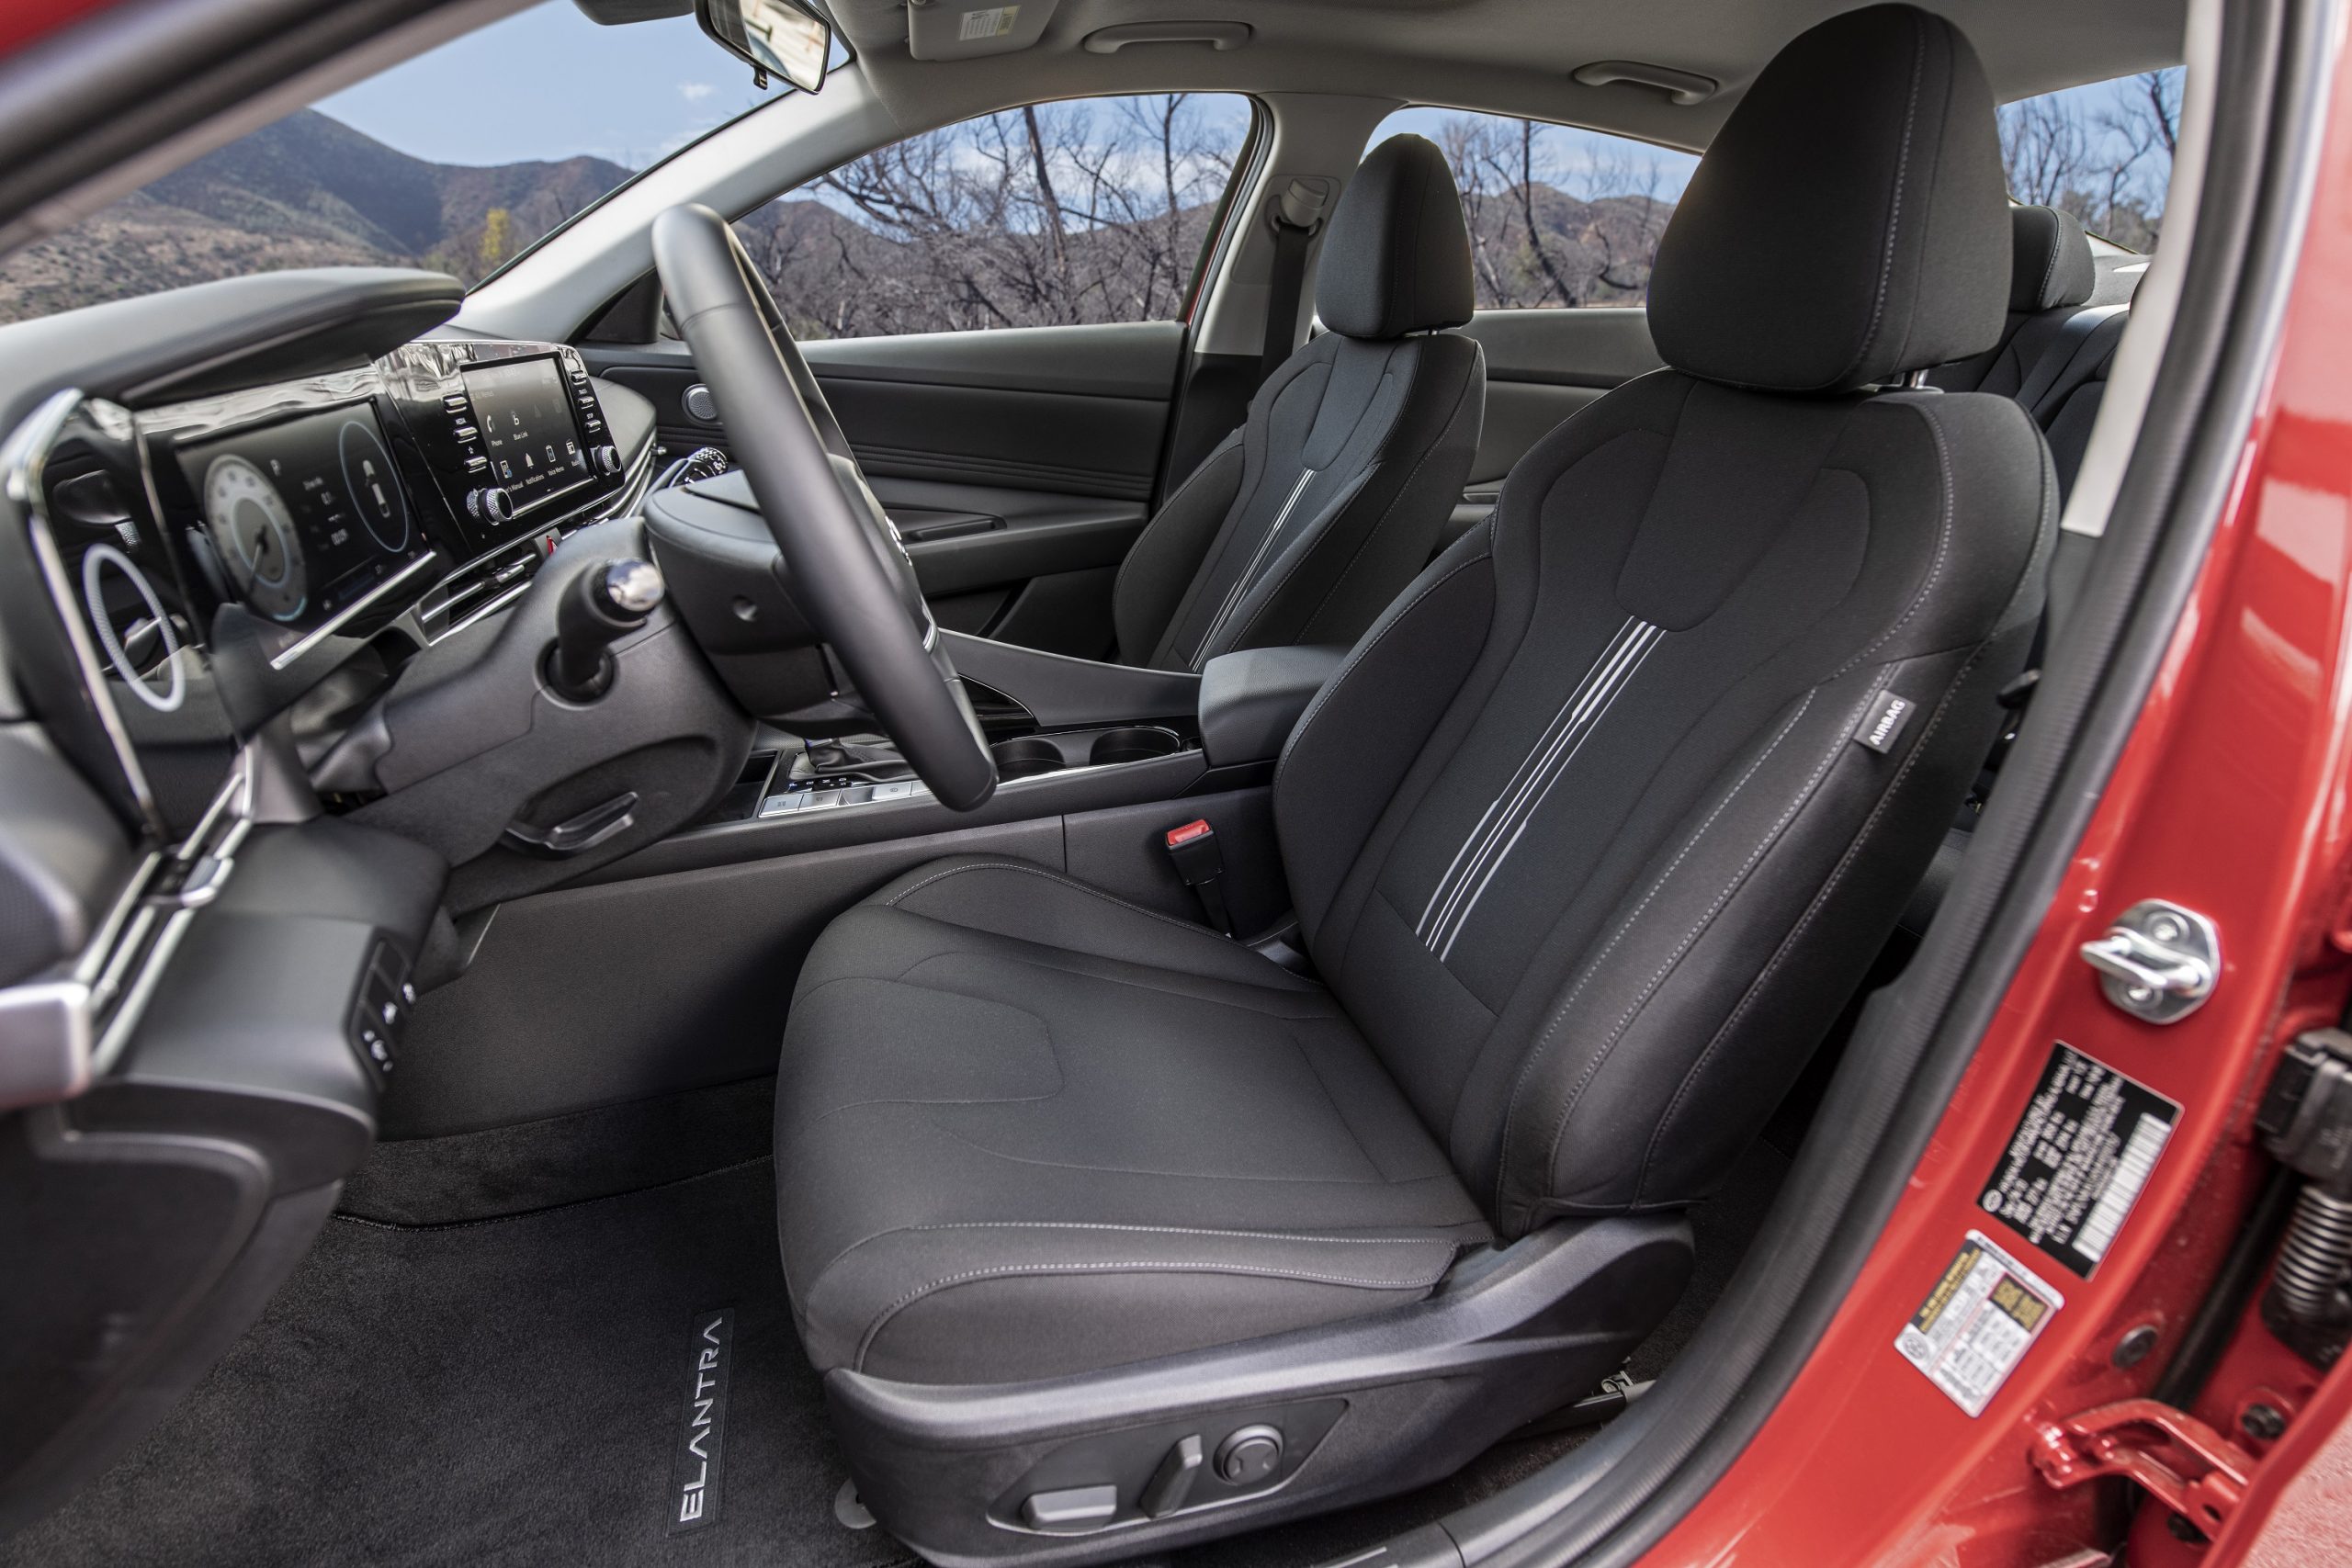 The 2022 Hyundai Elantra's interior